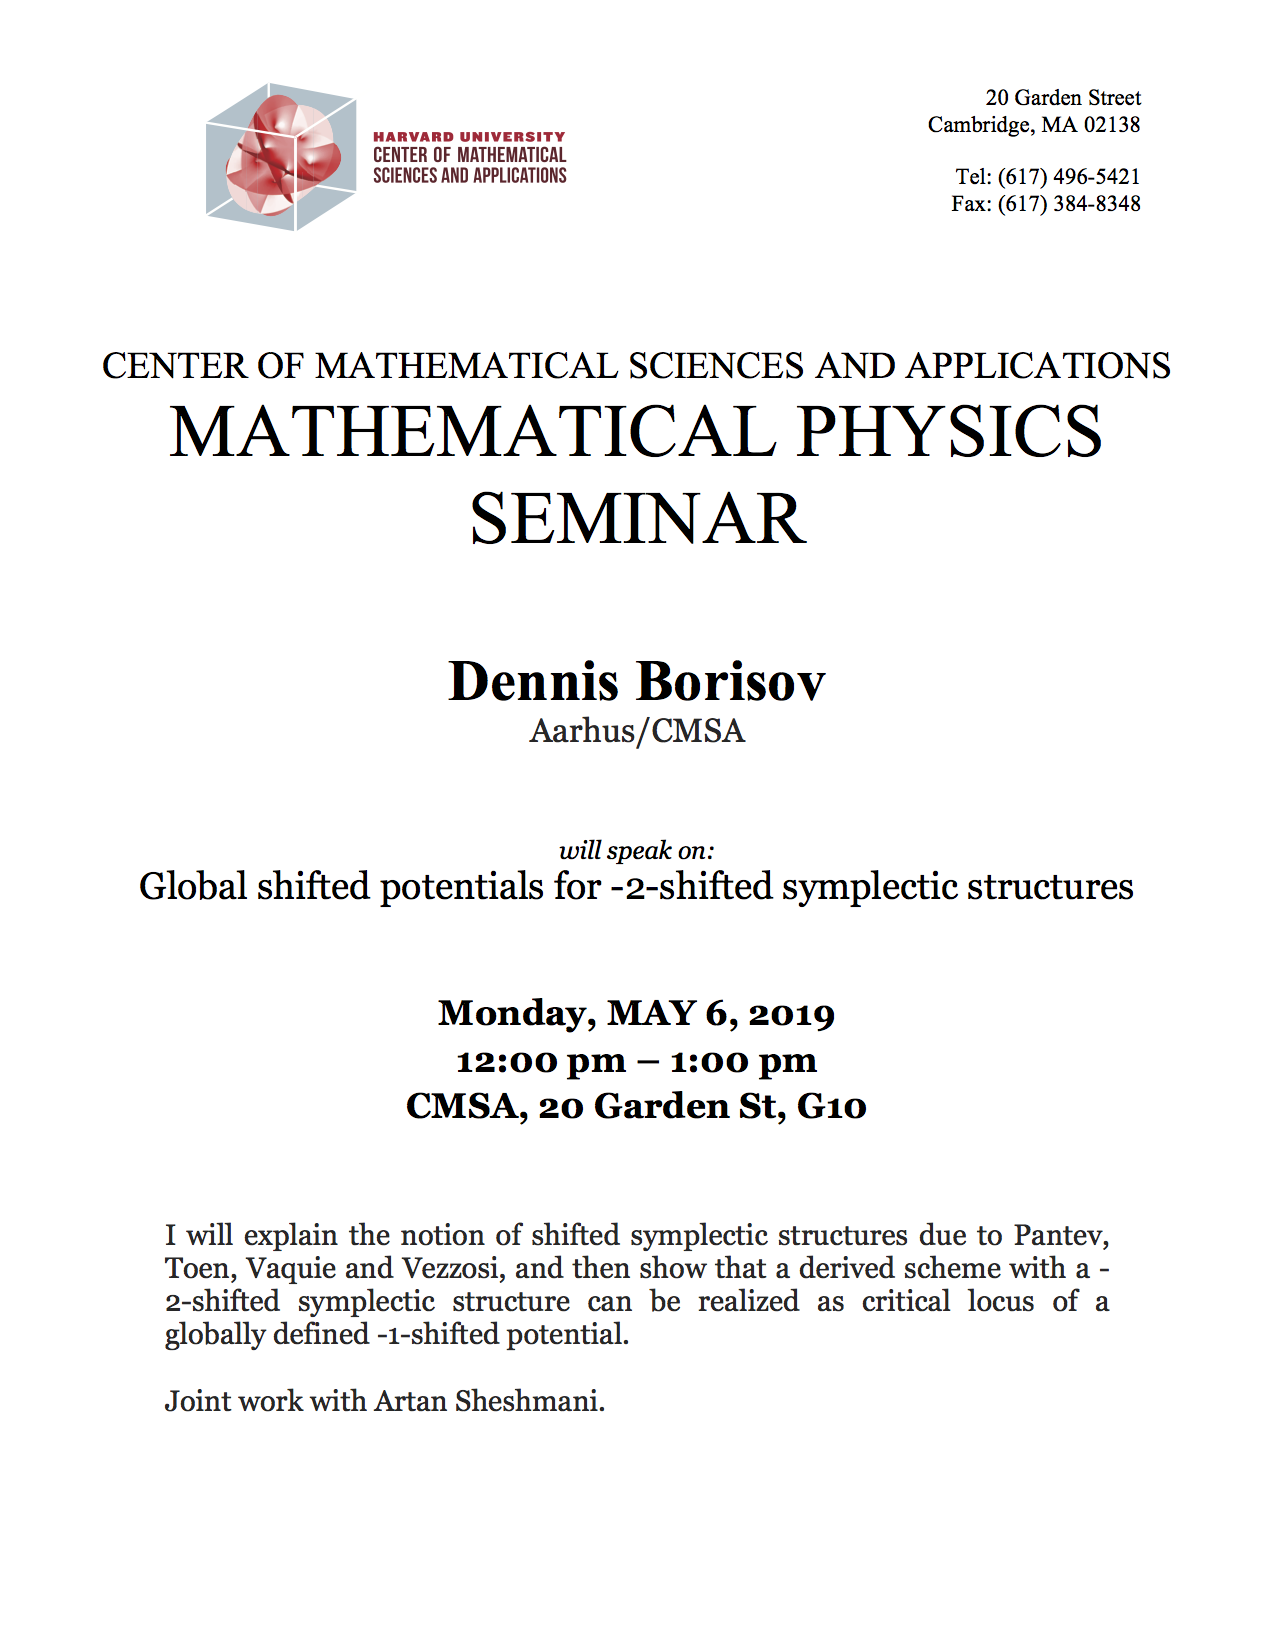 5/6/2019 Math Physics